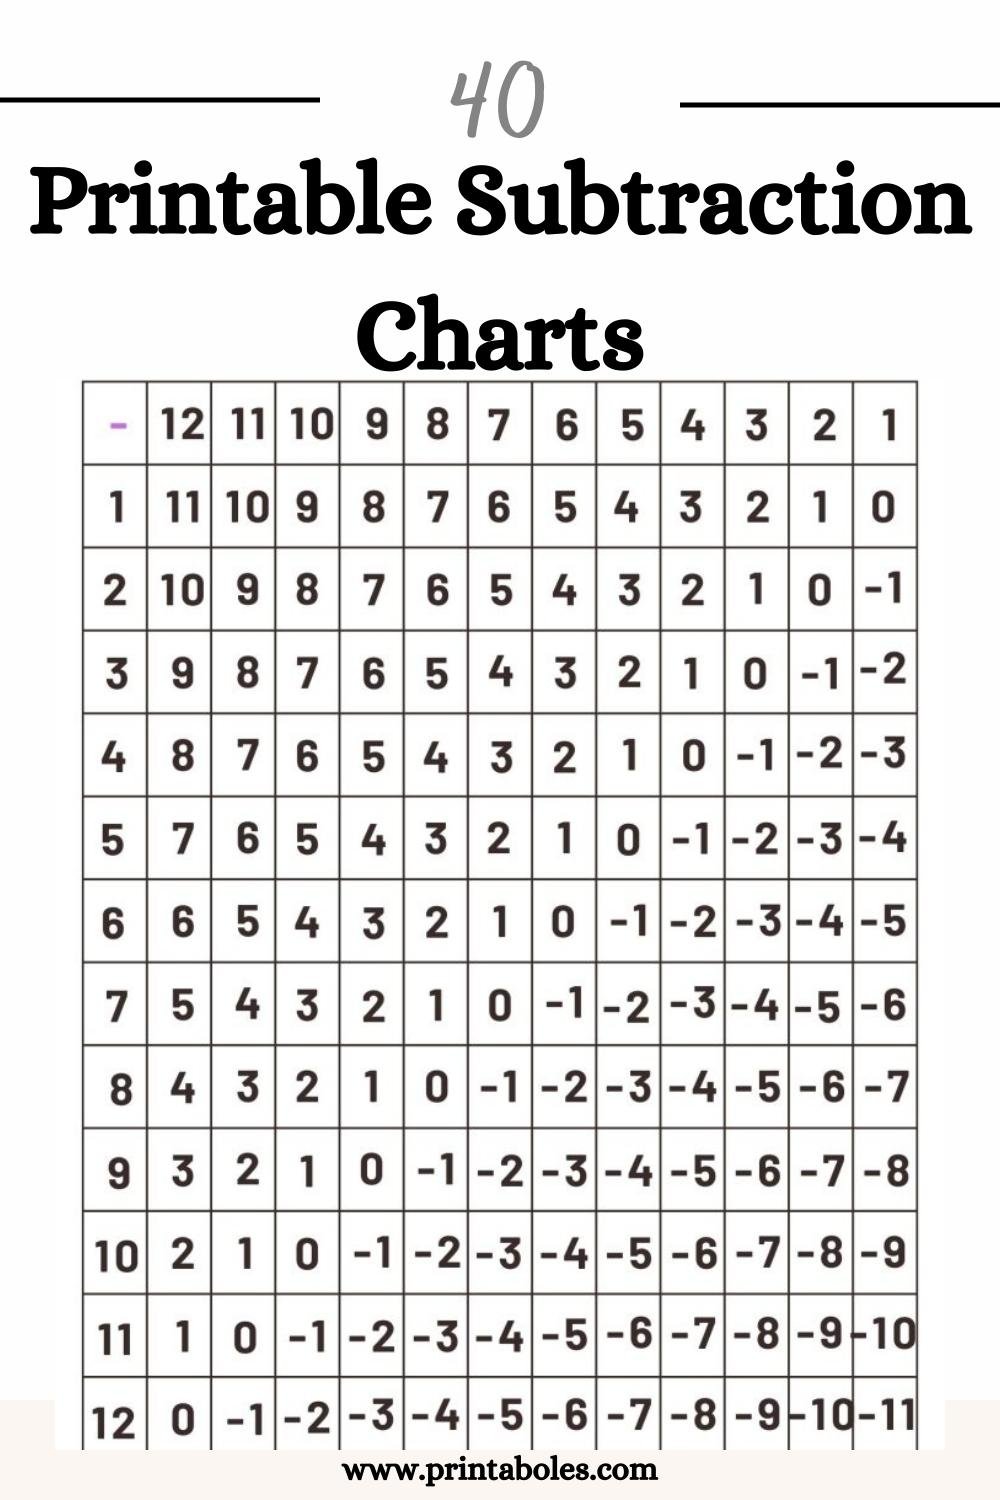 Printable Subtraction Charts